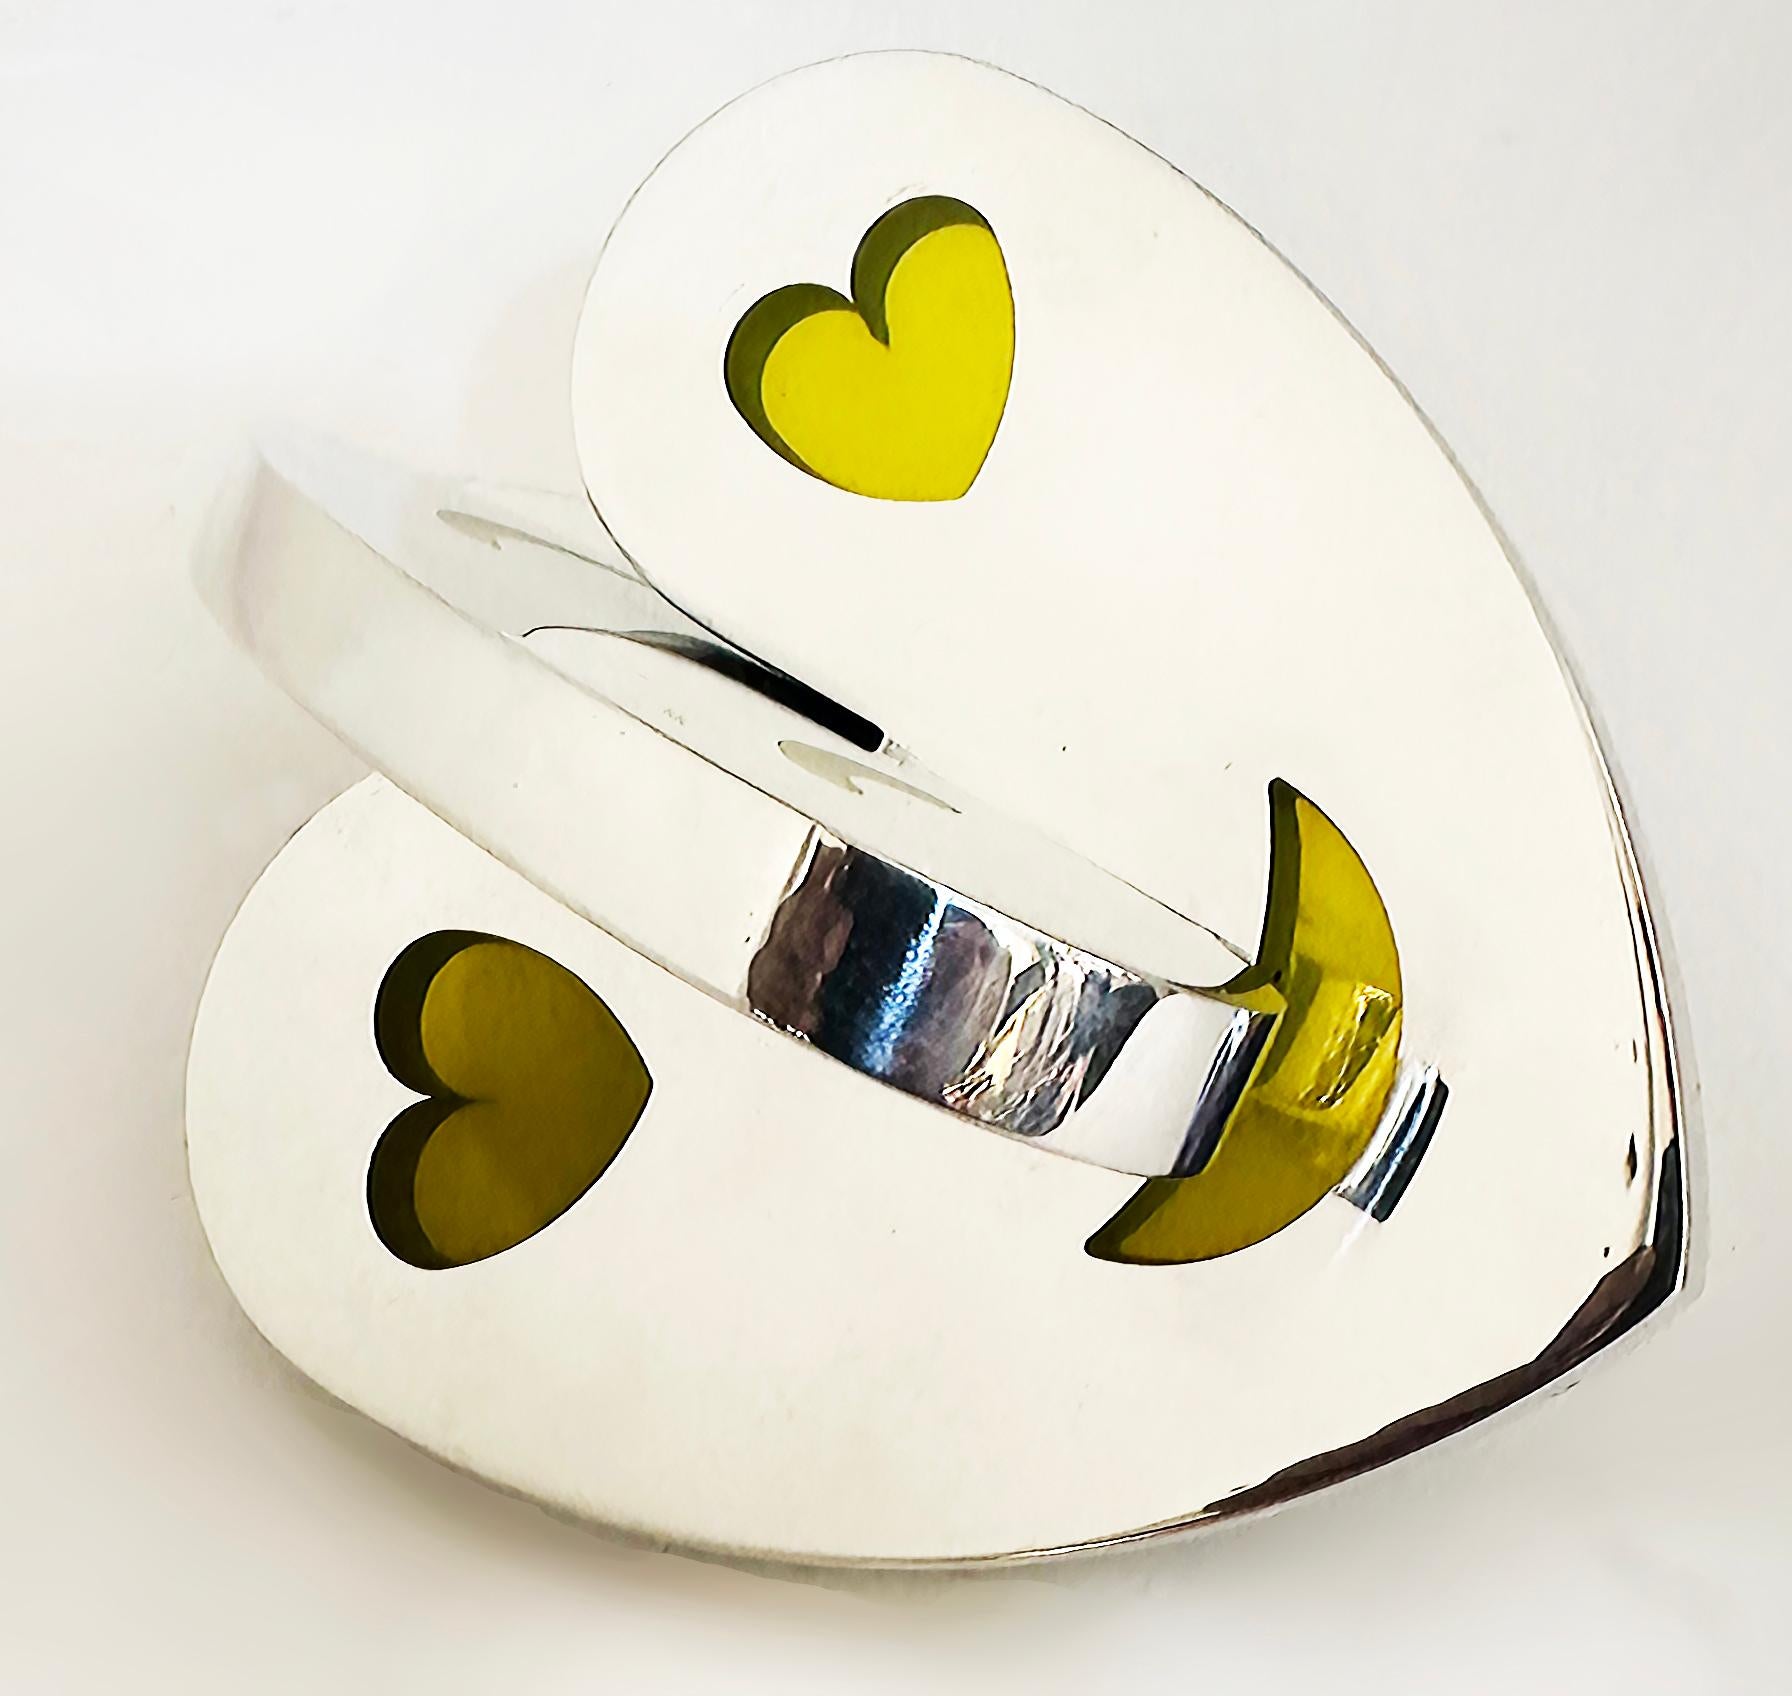   Aluminum, Epoxy Resin Interlocking Hearts Sculpture by Michael Gitter In New Condition For Sale In Miami, FL